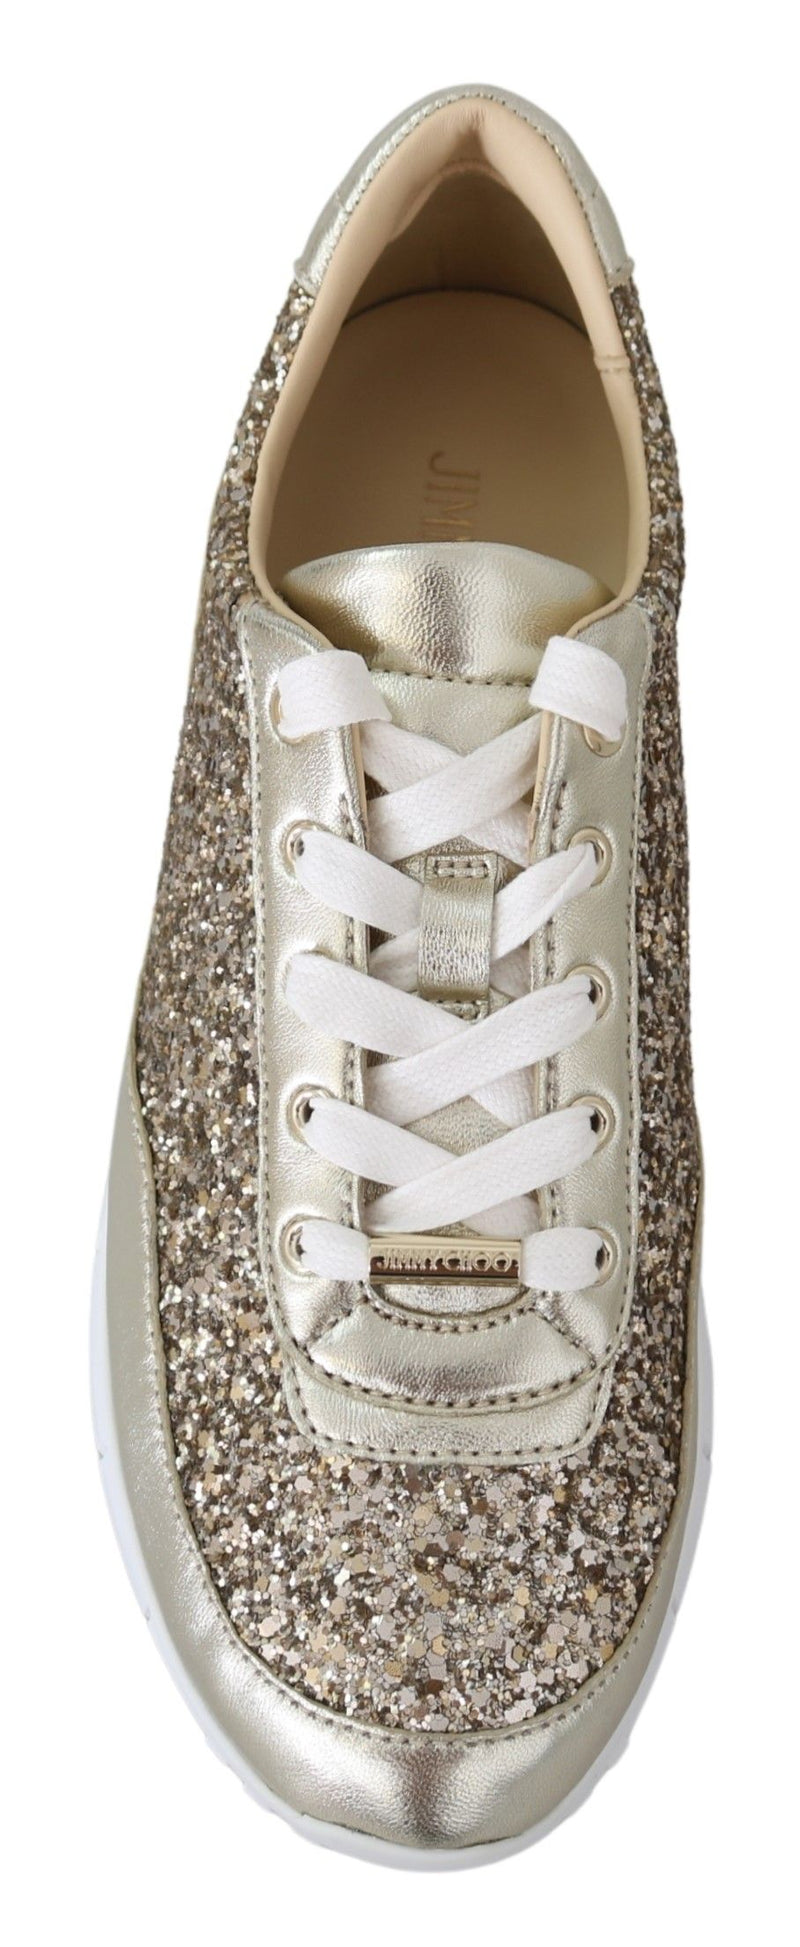 Jimmy Choo Antique Gold Glitter Leather Women's Sneakers